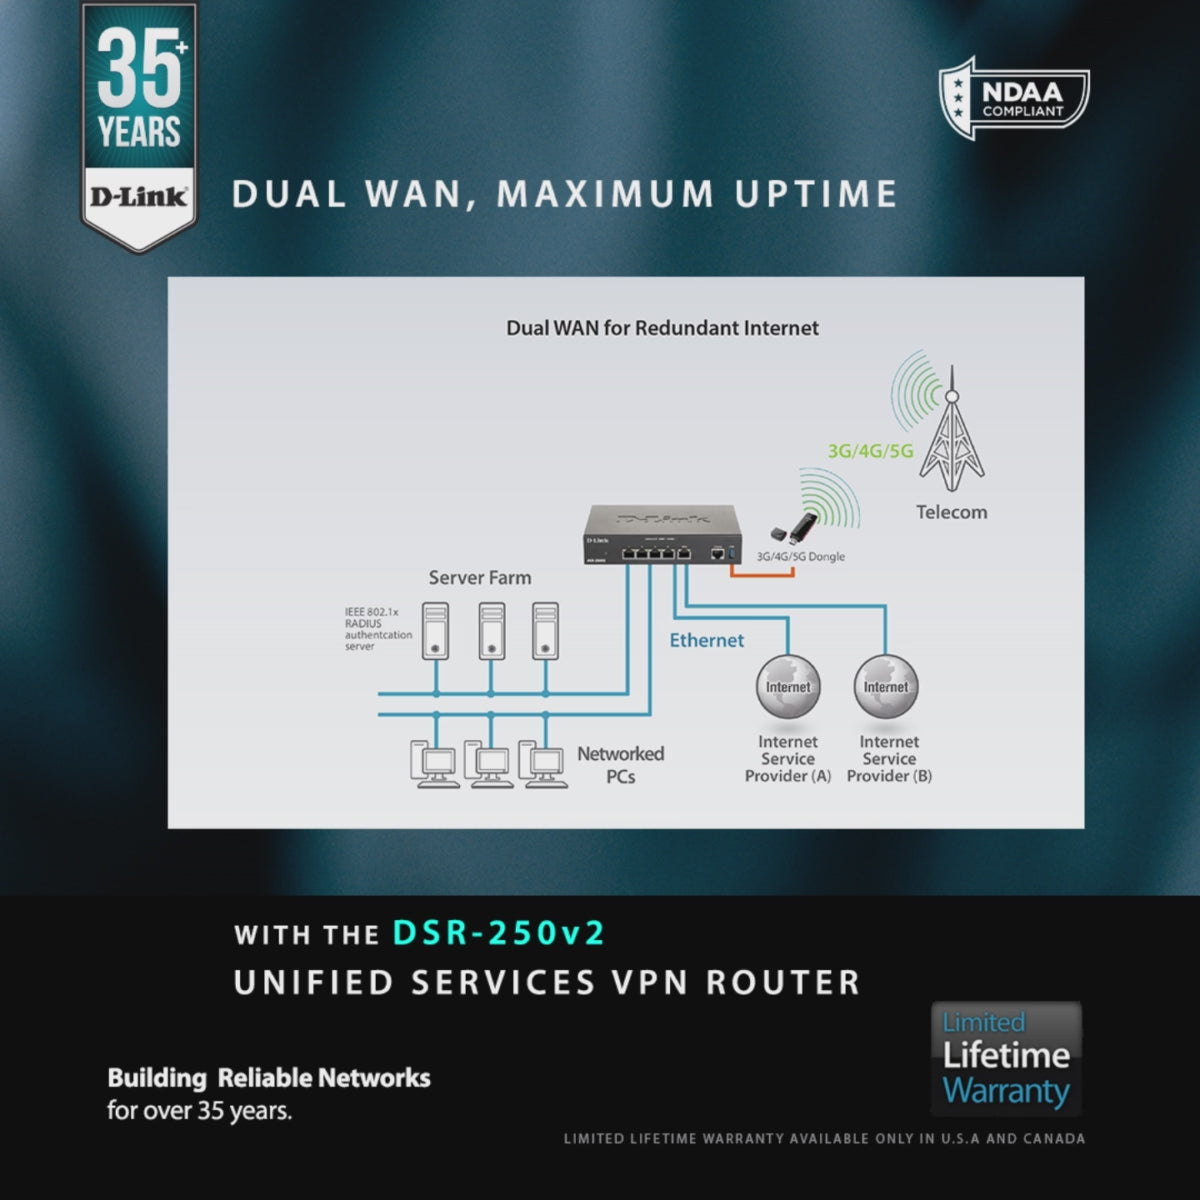 D-Link Dual Wan, Maximum Uptime DSR-250v2 5 Gigabit VPN Router